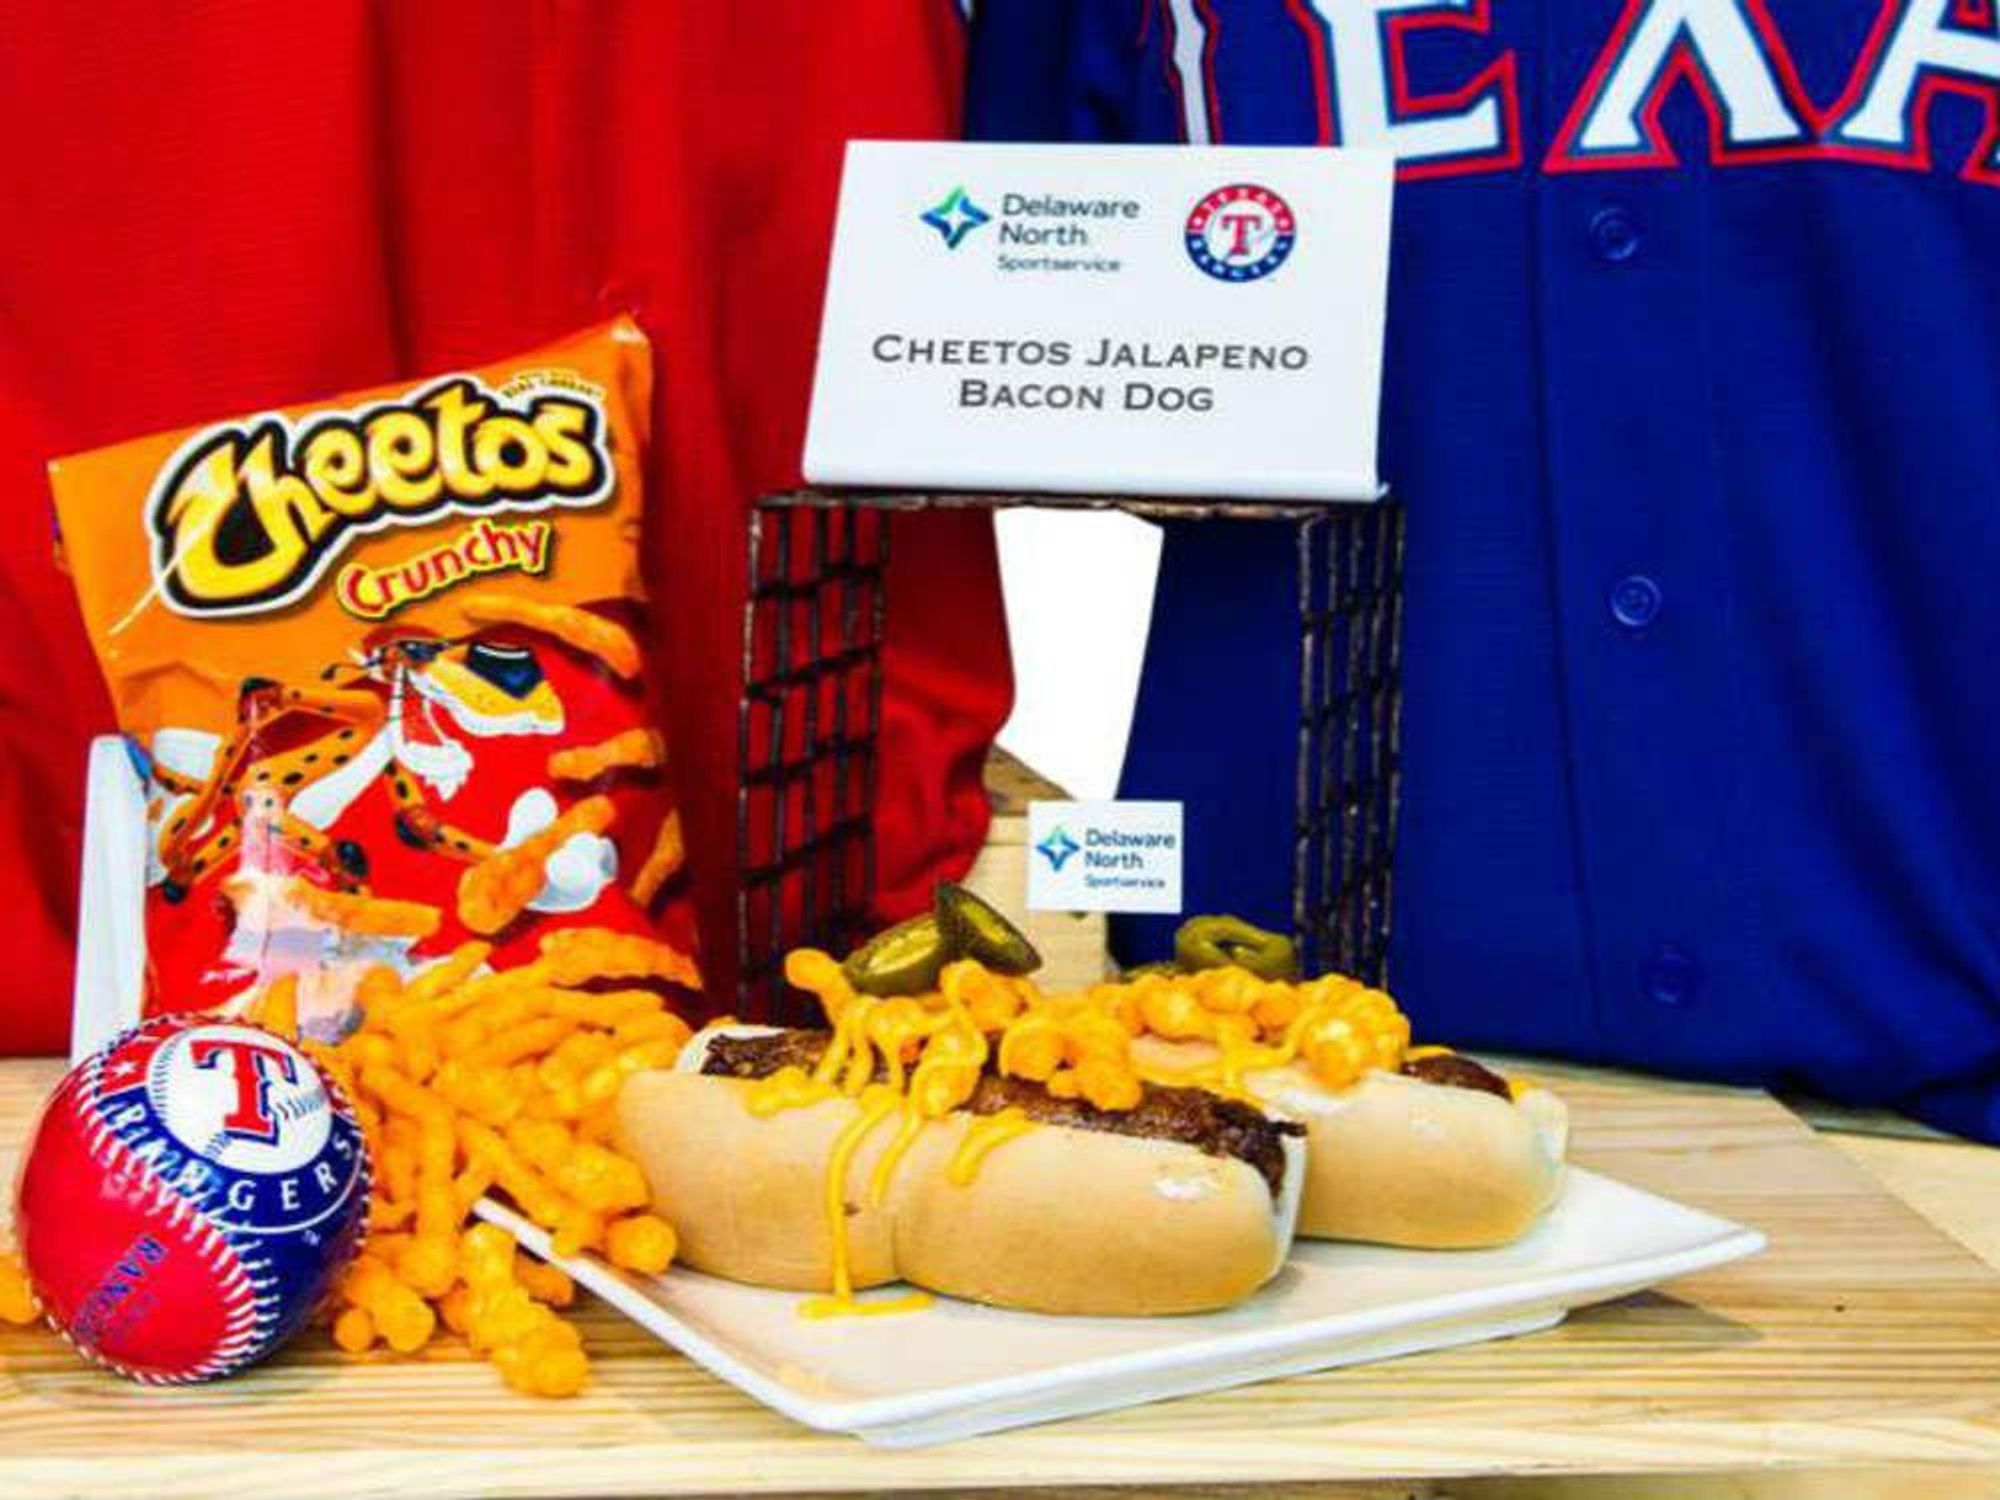 Texas Rangers unleash new crop of outrageous ballpark snacks - CultureMap  Fort Worth